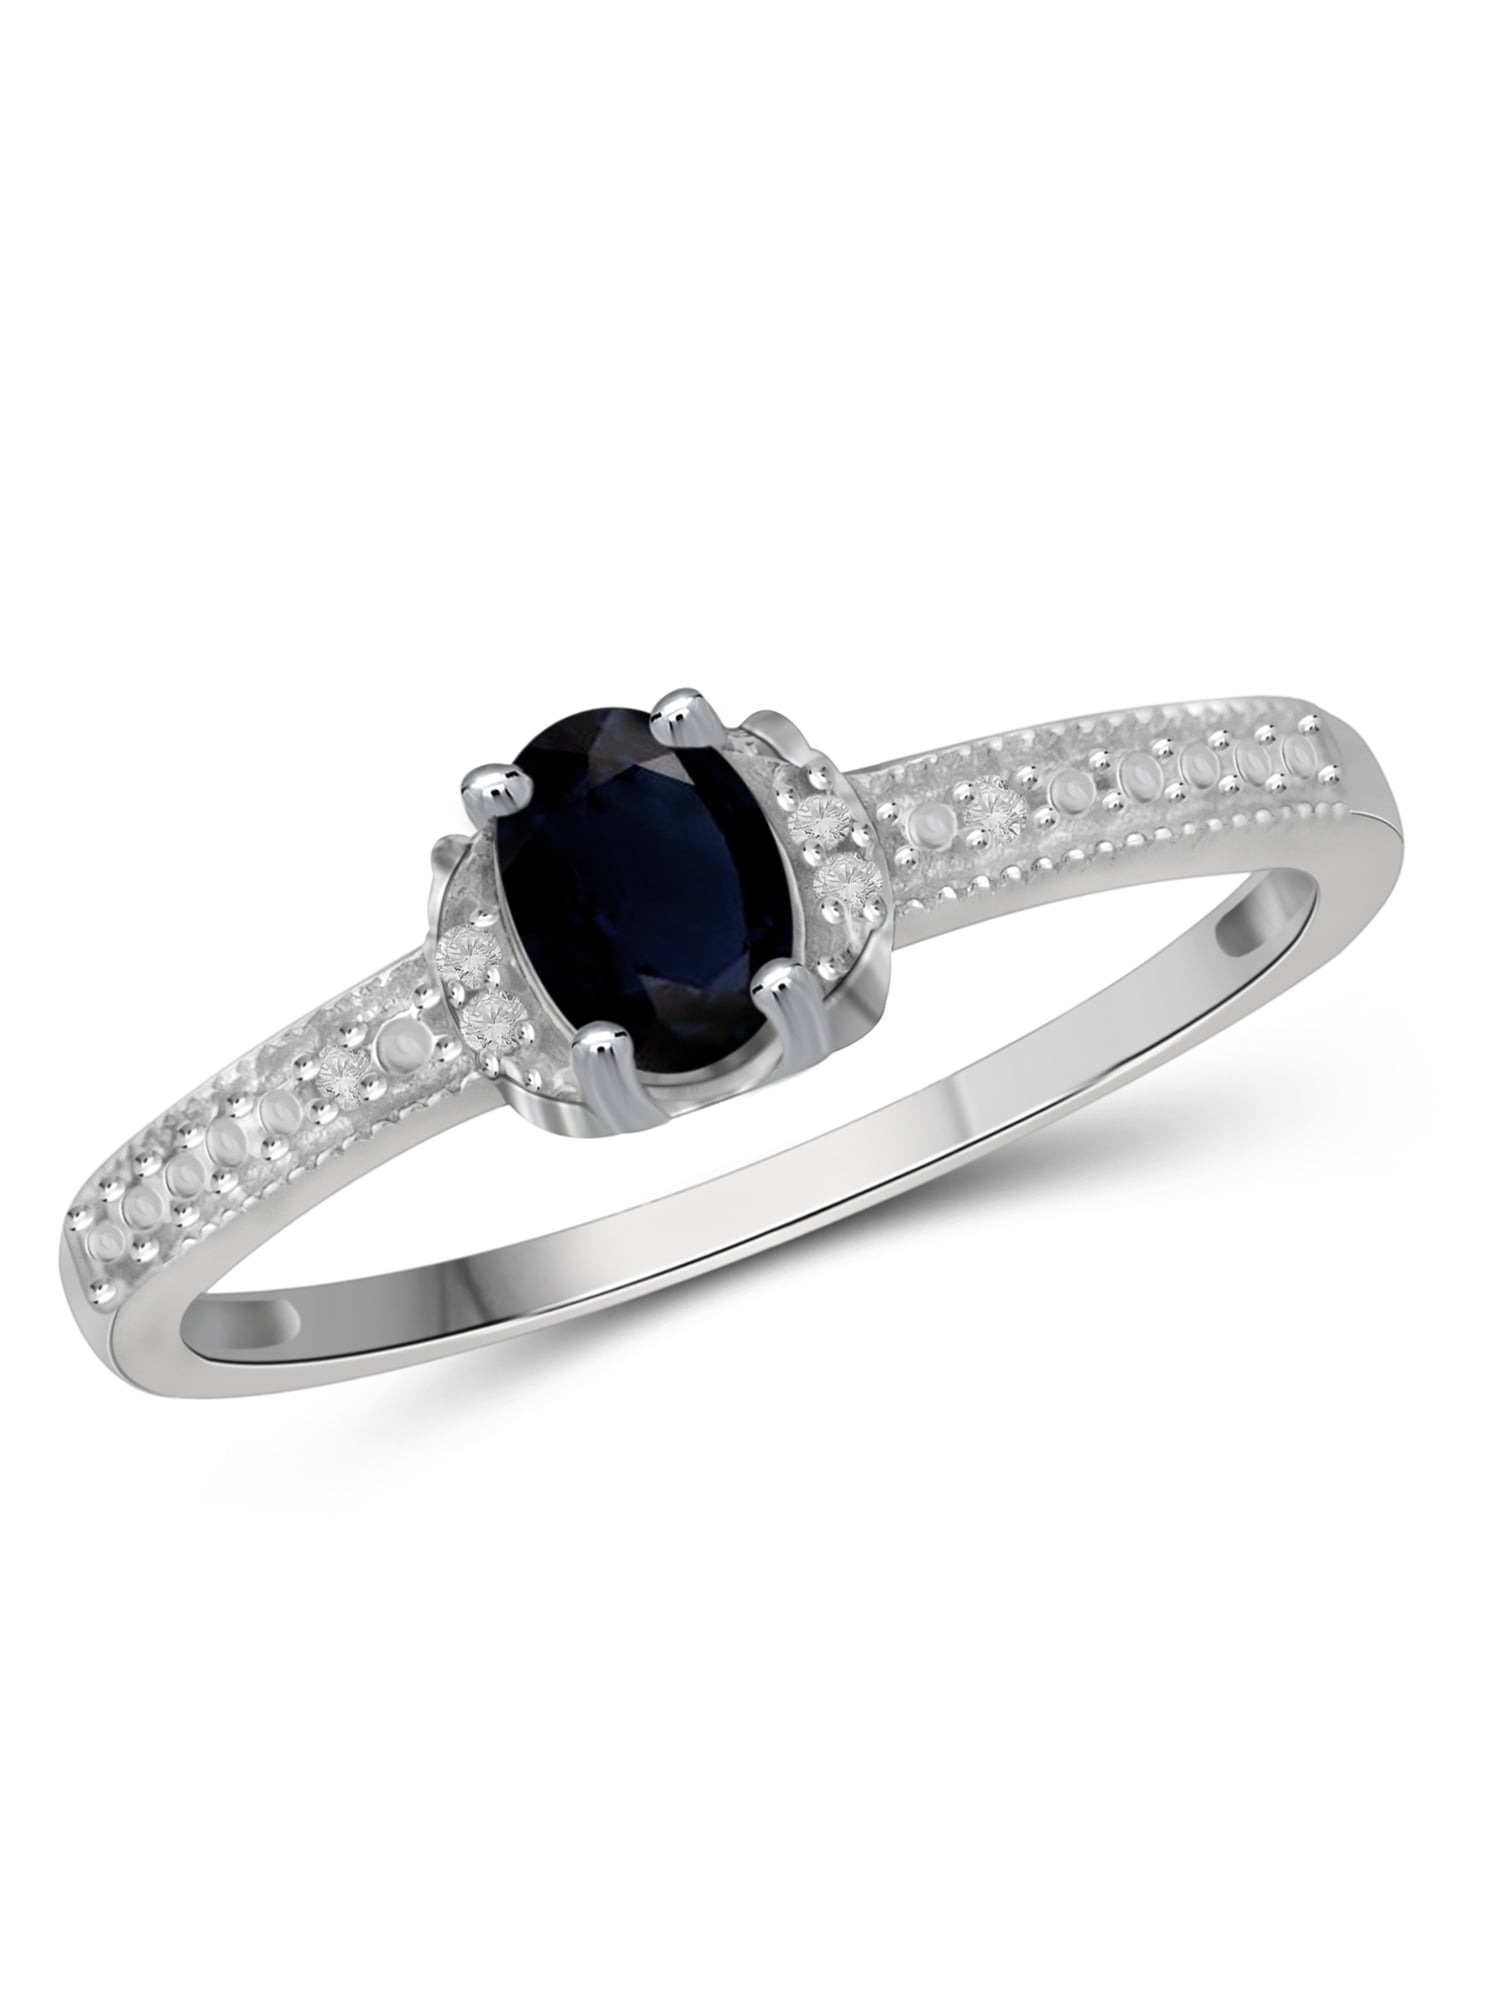 Blue Sapphire Ring, September Birthstone Ring - Urban Carats